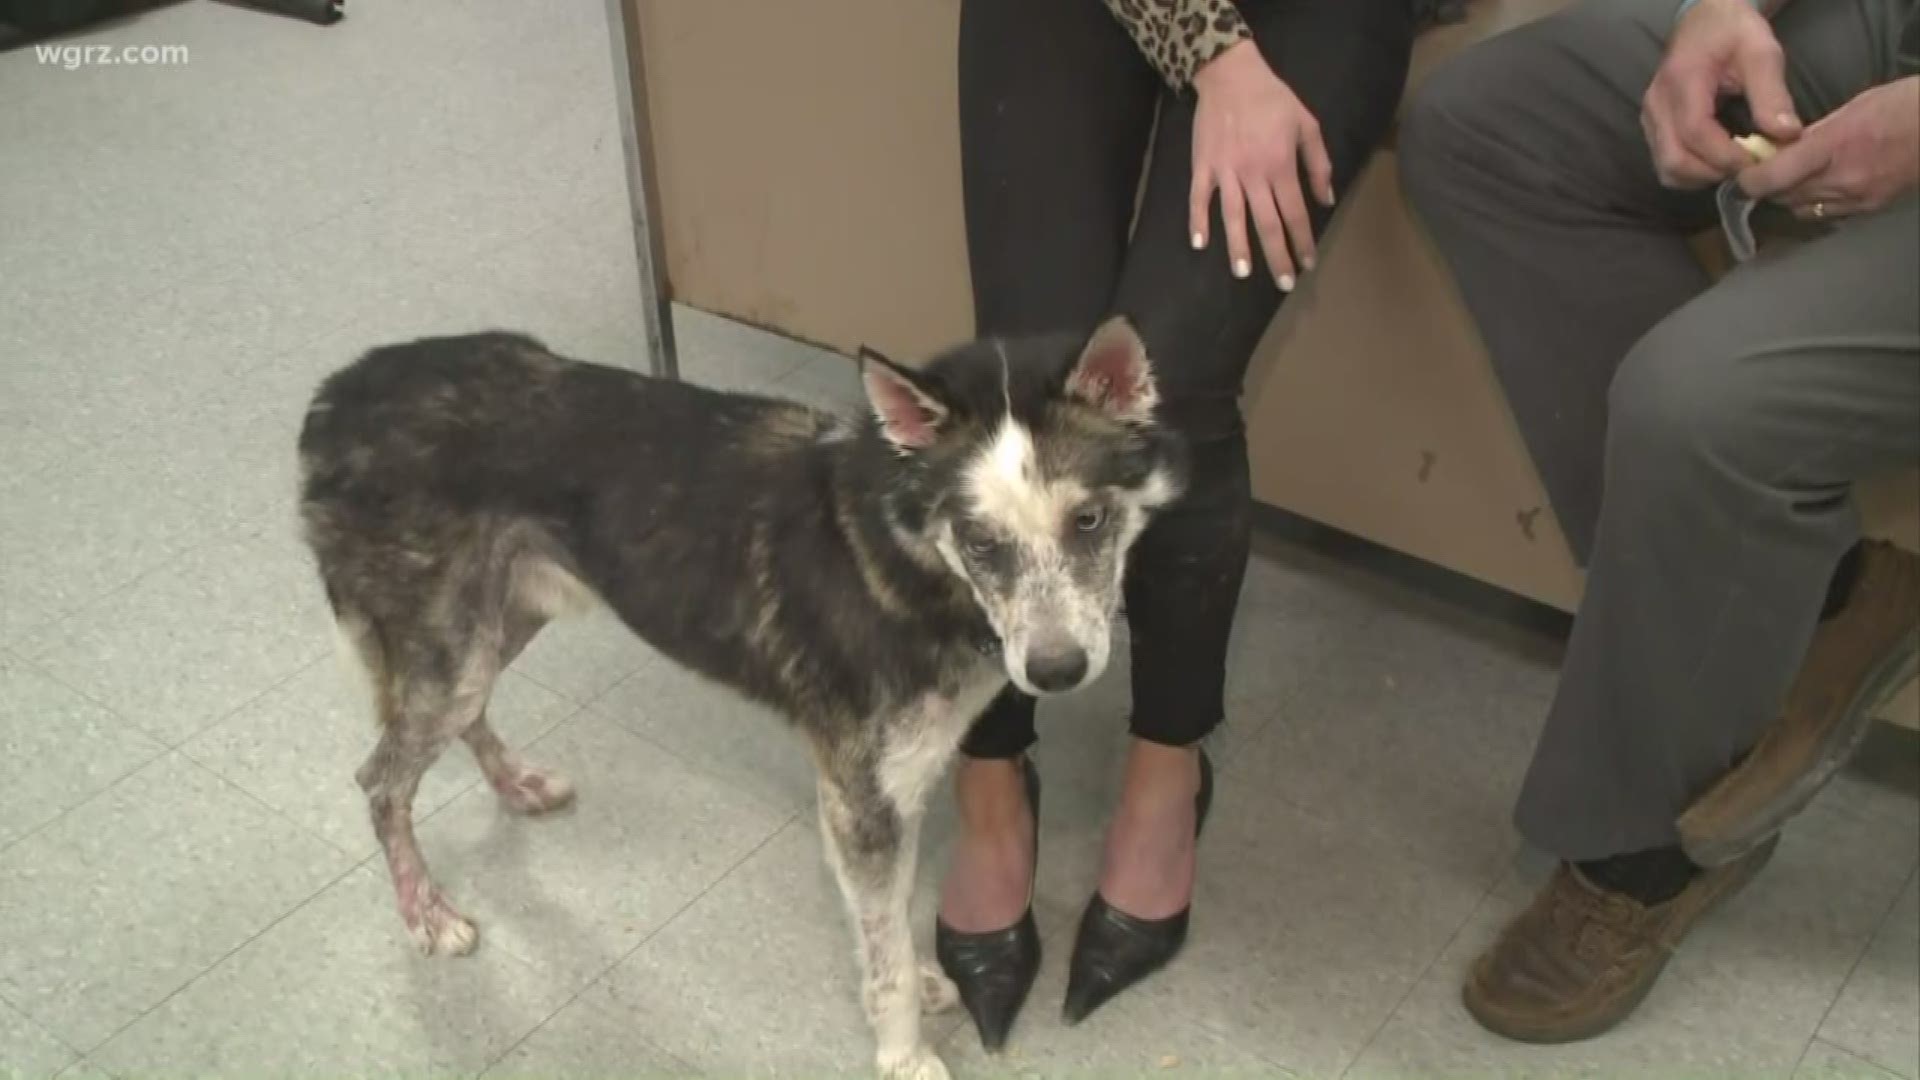 A good Samaritan in Niagara Falls brought the dog to the facility on February 6